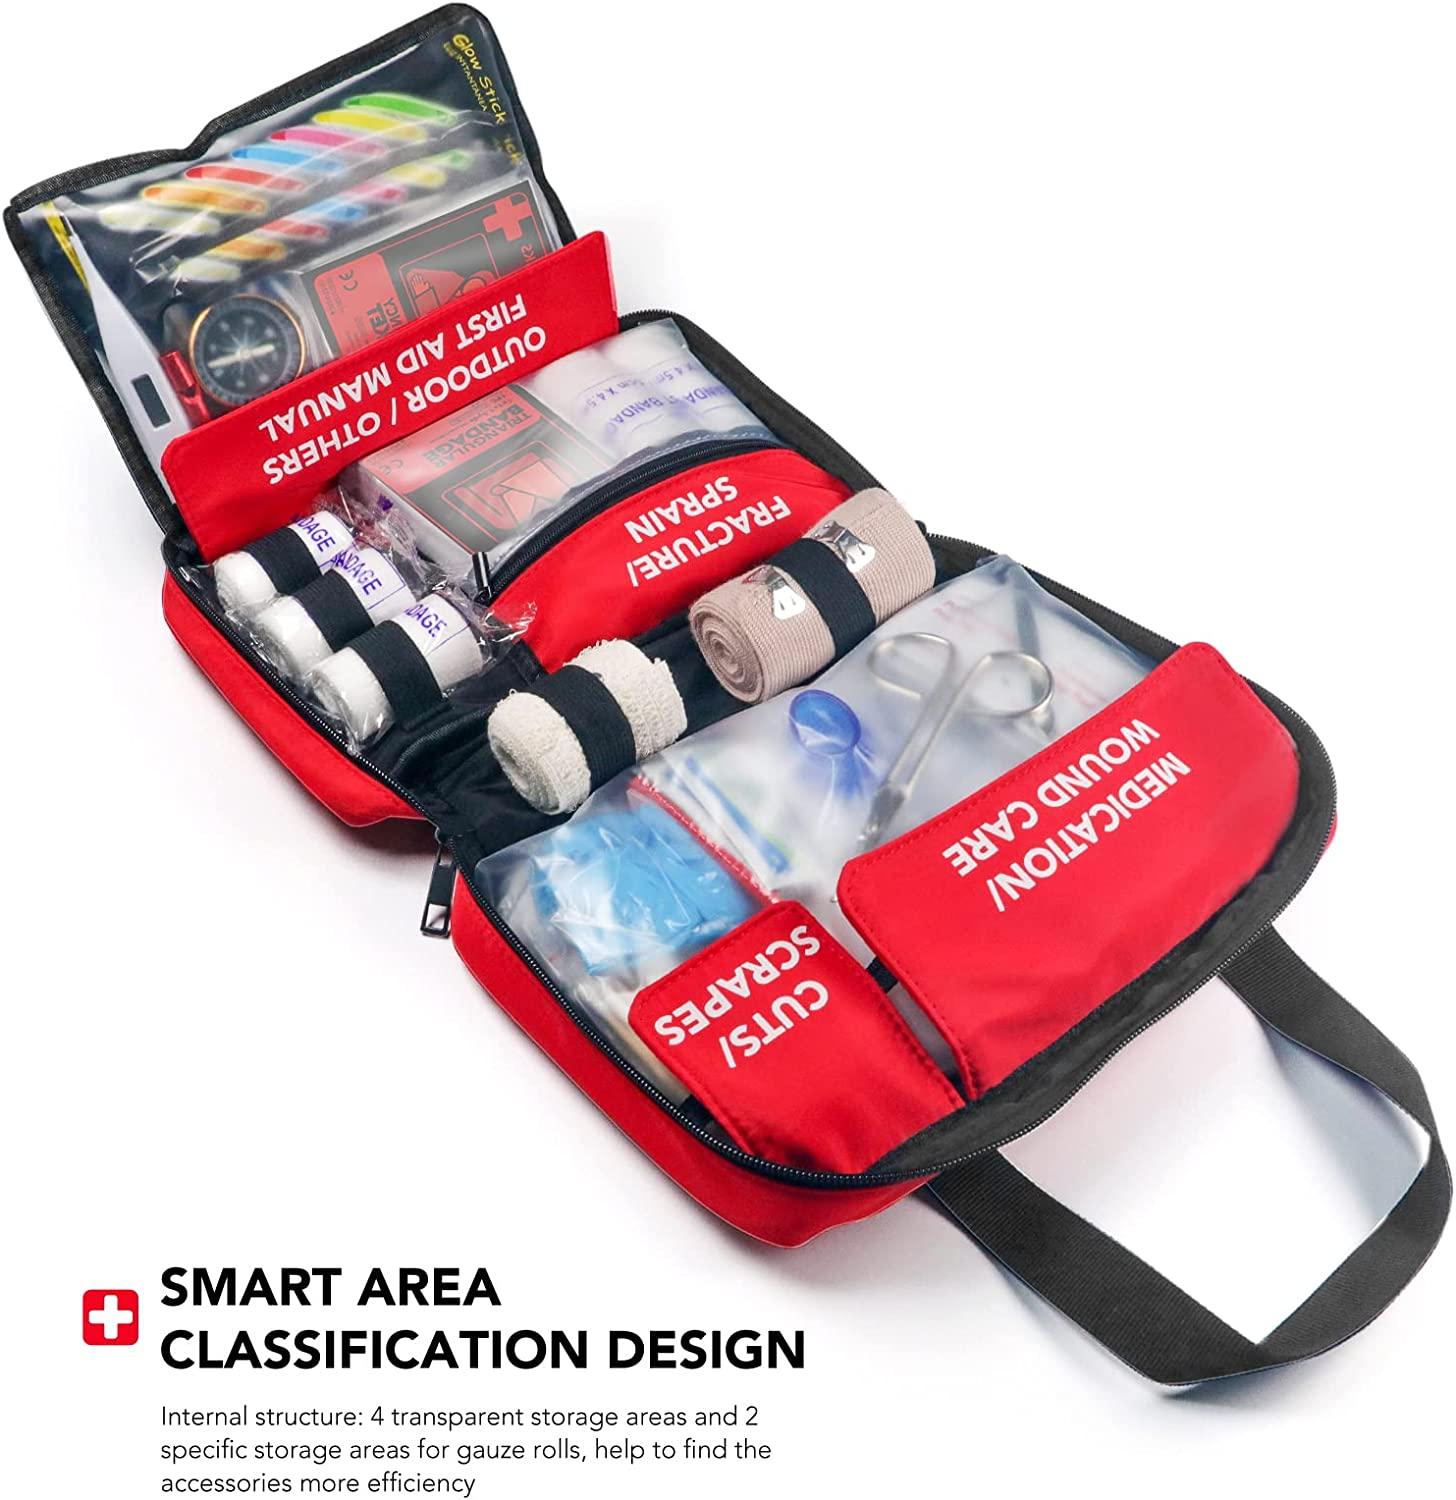 330 Piece First Aid Kit, Premium Waterproof Compact Trauma Medical